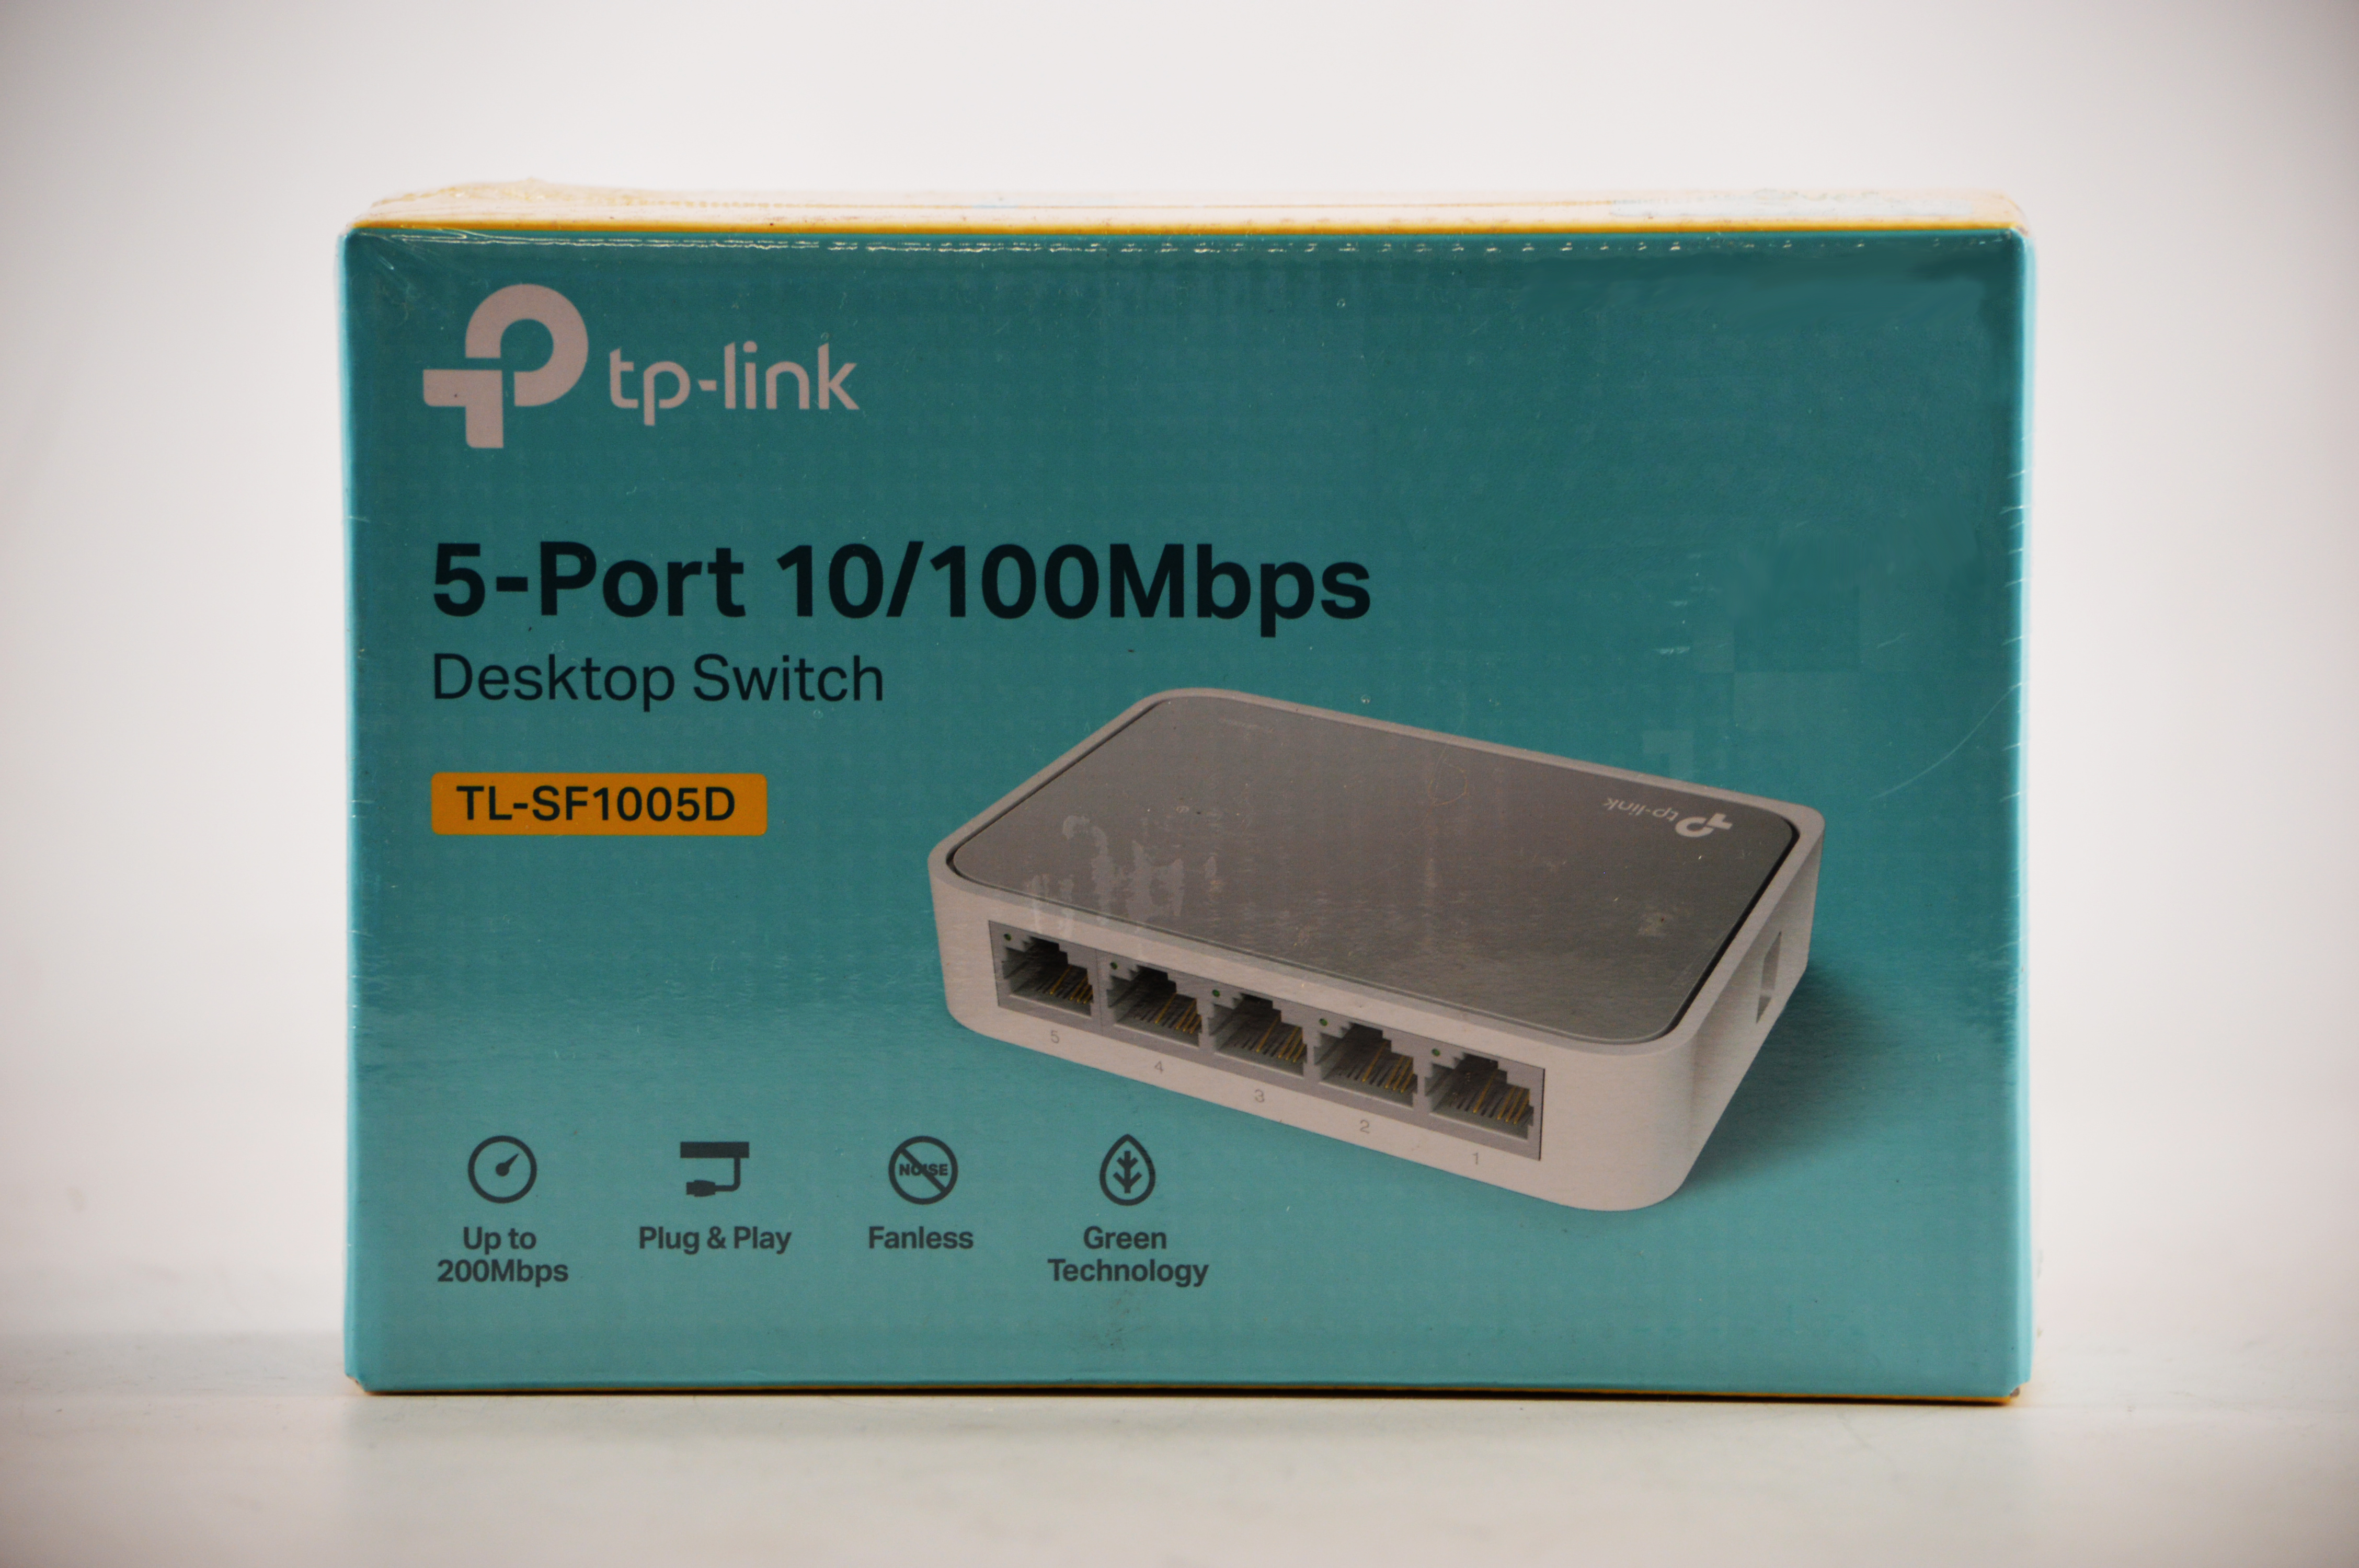 TL-SF1005D, 5-Port 10/100Mbps Desktop Switch